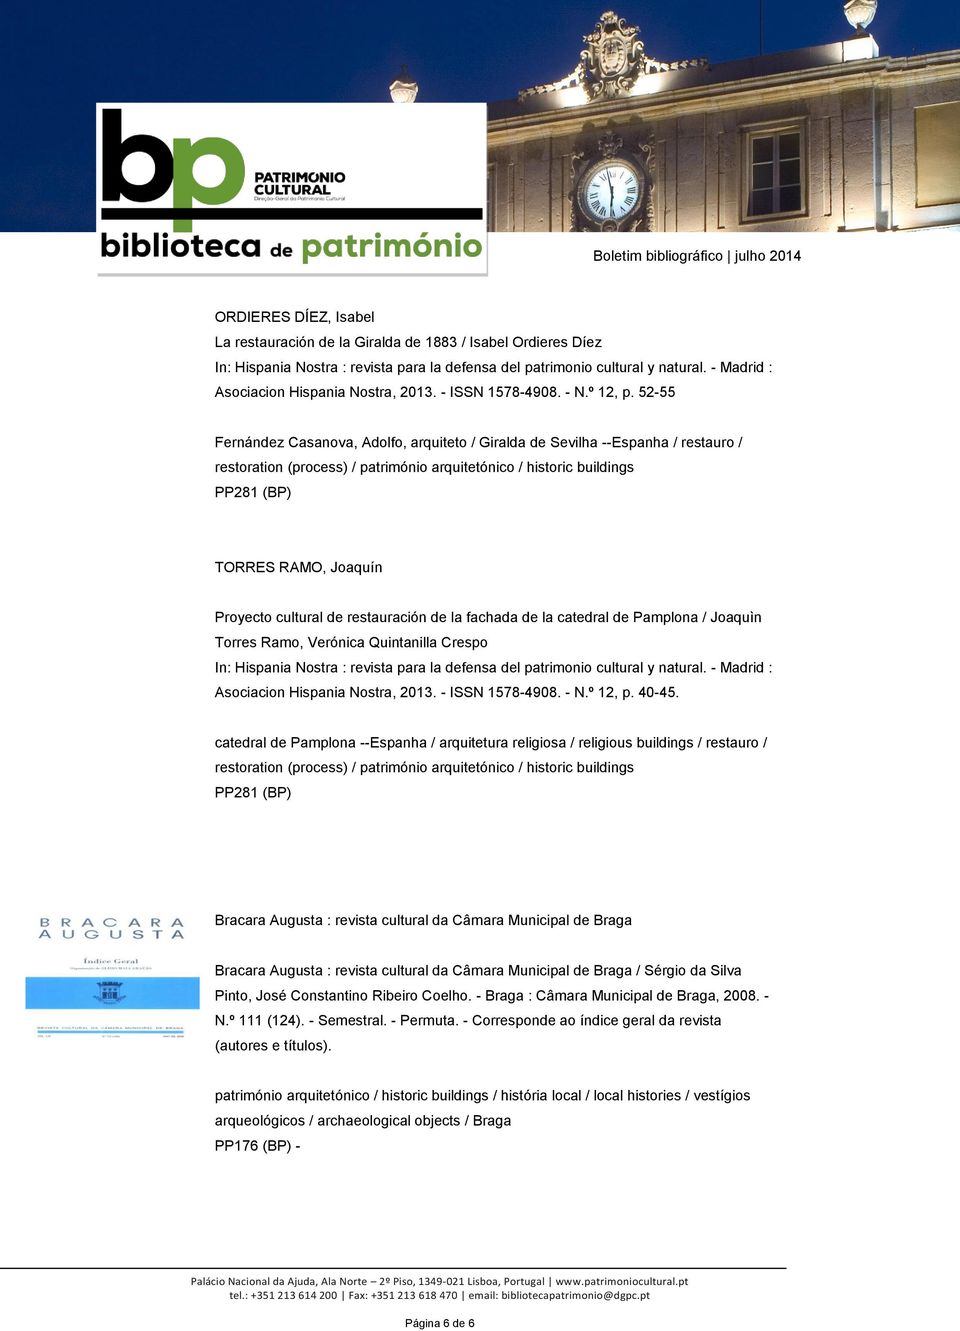 52-55 Fernández Casanova, Adolfo, arquiteto / Giralda de Sevilha --Espanha / restauro / restoration (process) / património arquitetónico / historic buildings PP281 (BP) TORRES RAMO, Joaquín Proyecto